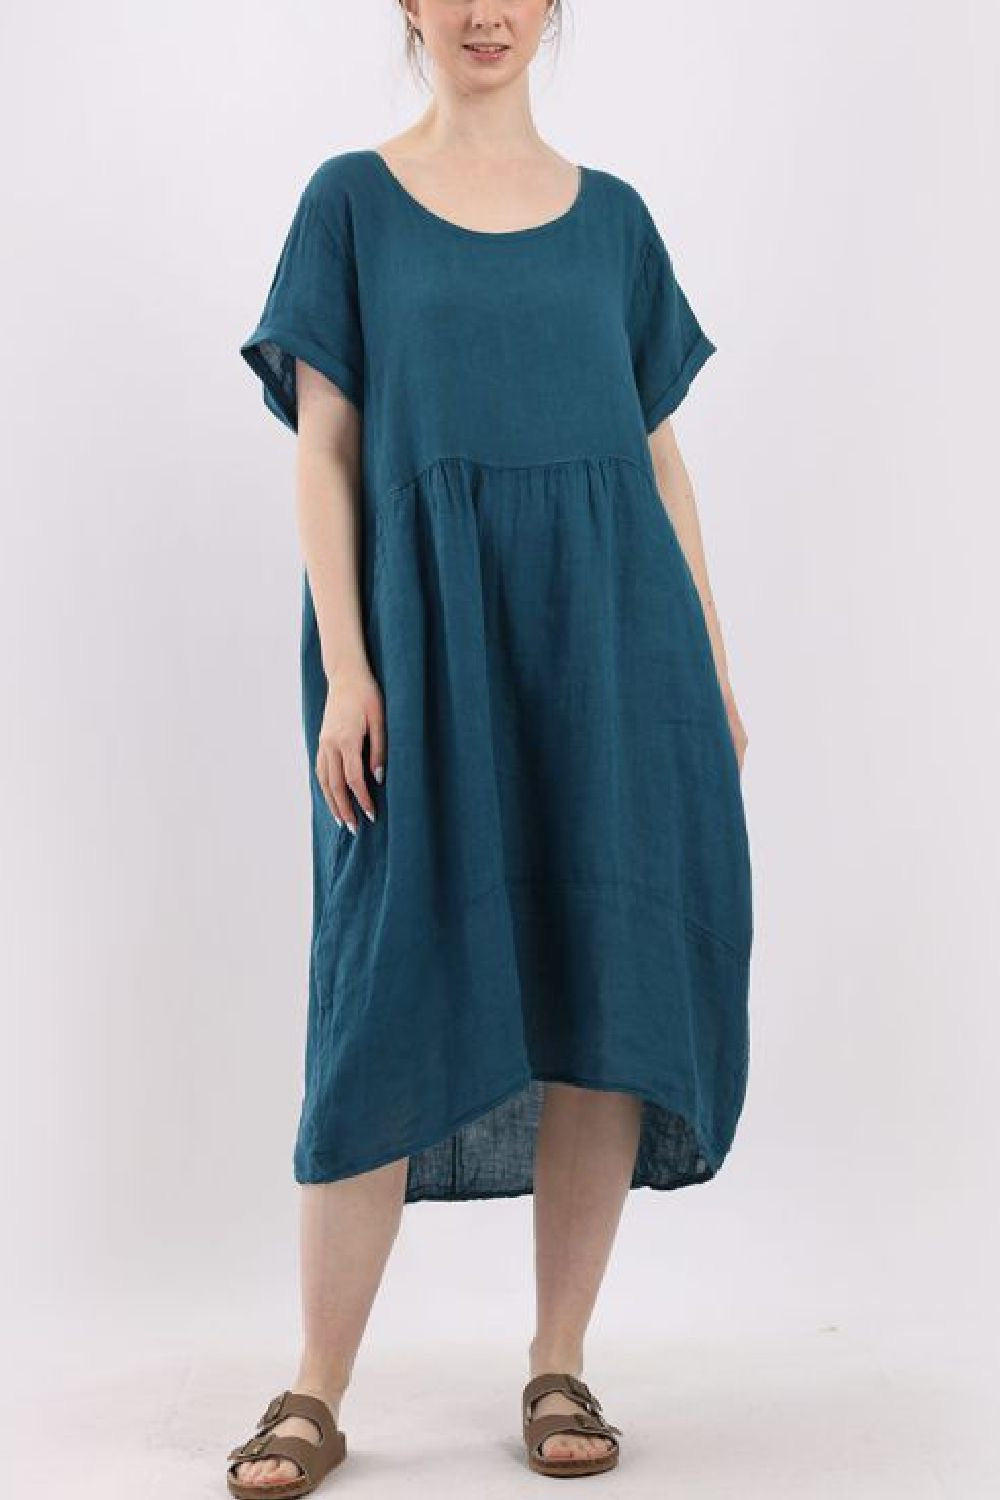 Linen Round Neck Elegant Style Dress - Teal